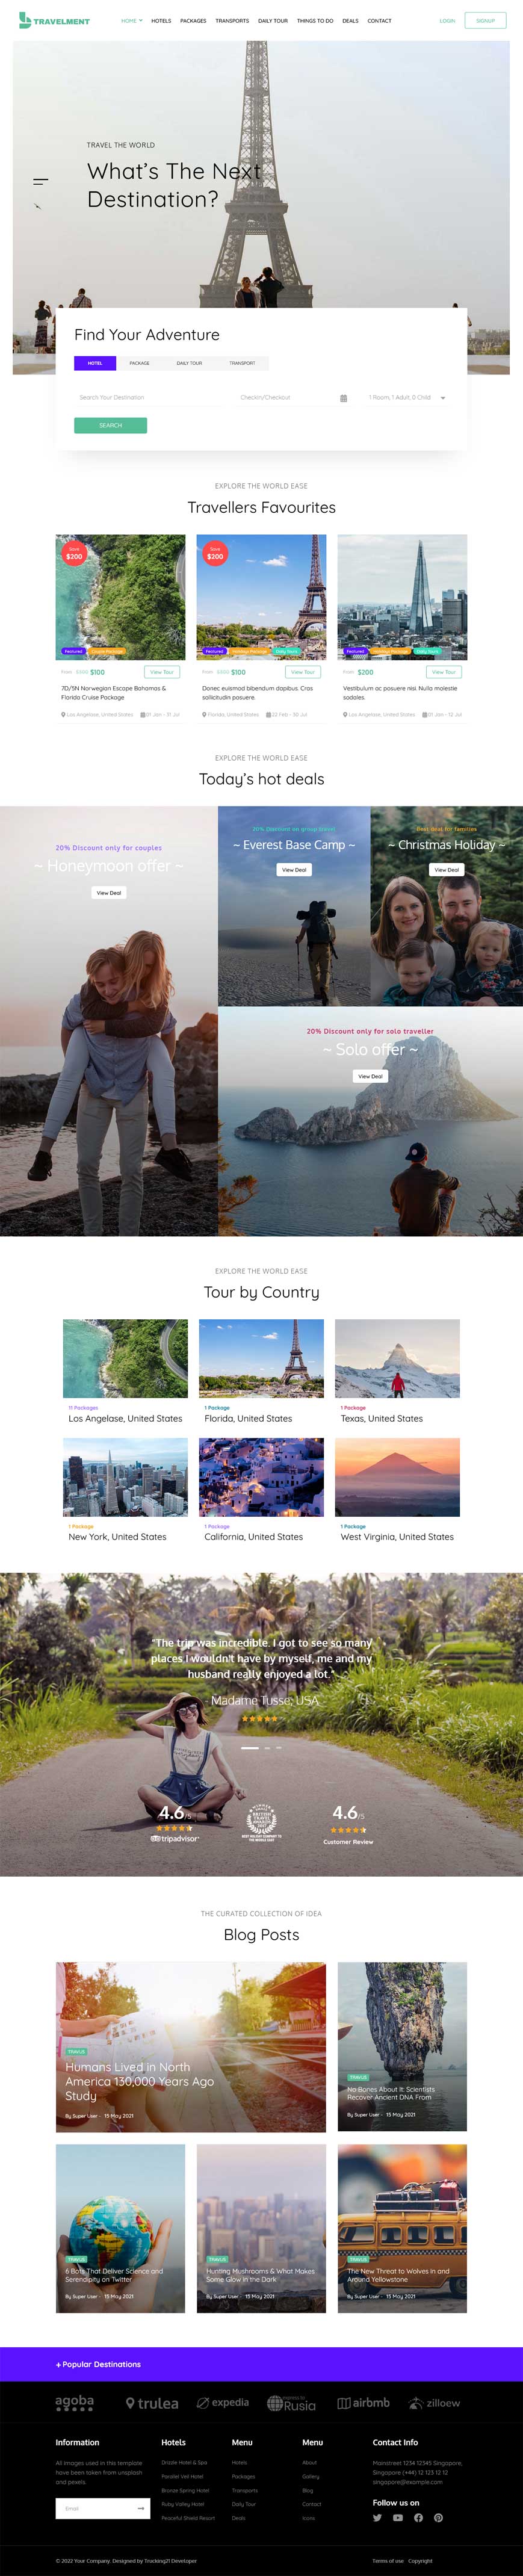 TRAVELMENT, Travel agency Website